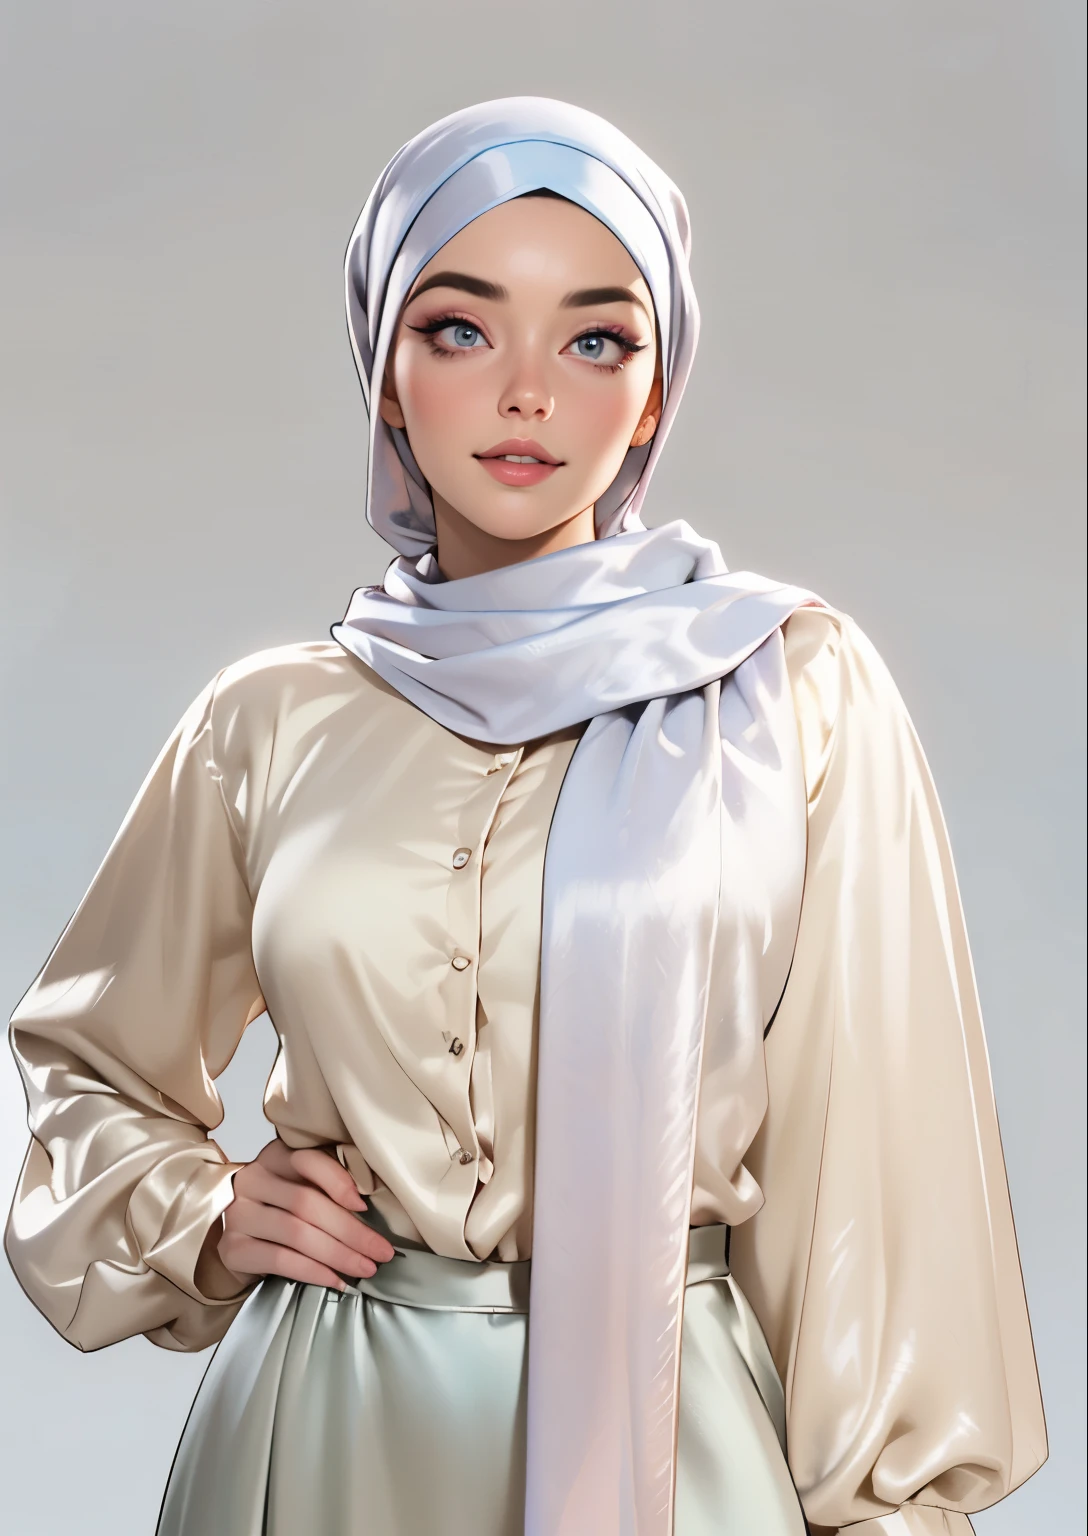 3dmm風格, (傑作), 實際的, 最好的品質, 最佳照明, 非常詳細的artgerm, 風格藝術傑姆, 美麗的成熟女人, 1 女孩單獨照片, 美麗的妝容, 眼影, 張開雙唇, 細緻的眼睛, ((美麗的大眼睛)), 長長的睫毛, 臉頰上有酒窩, 微笑, 戴絲綢頭巾頭巾, ((Dark blue 緞 hijab)), 寬鬆潮頭巾風格, 閃亮的絲綢, 緞, blue 緞, ((Blue 緞 shirt and 緞 long skirt)), (特寫肖像), 正視圖, 站立對稱中心, 面向觀眾, 護照照片, 灰色背景.